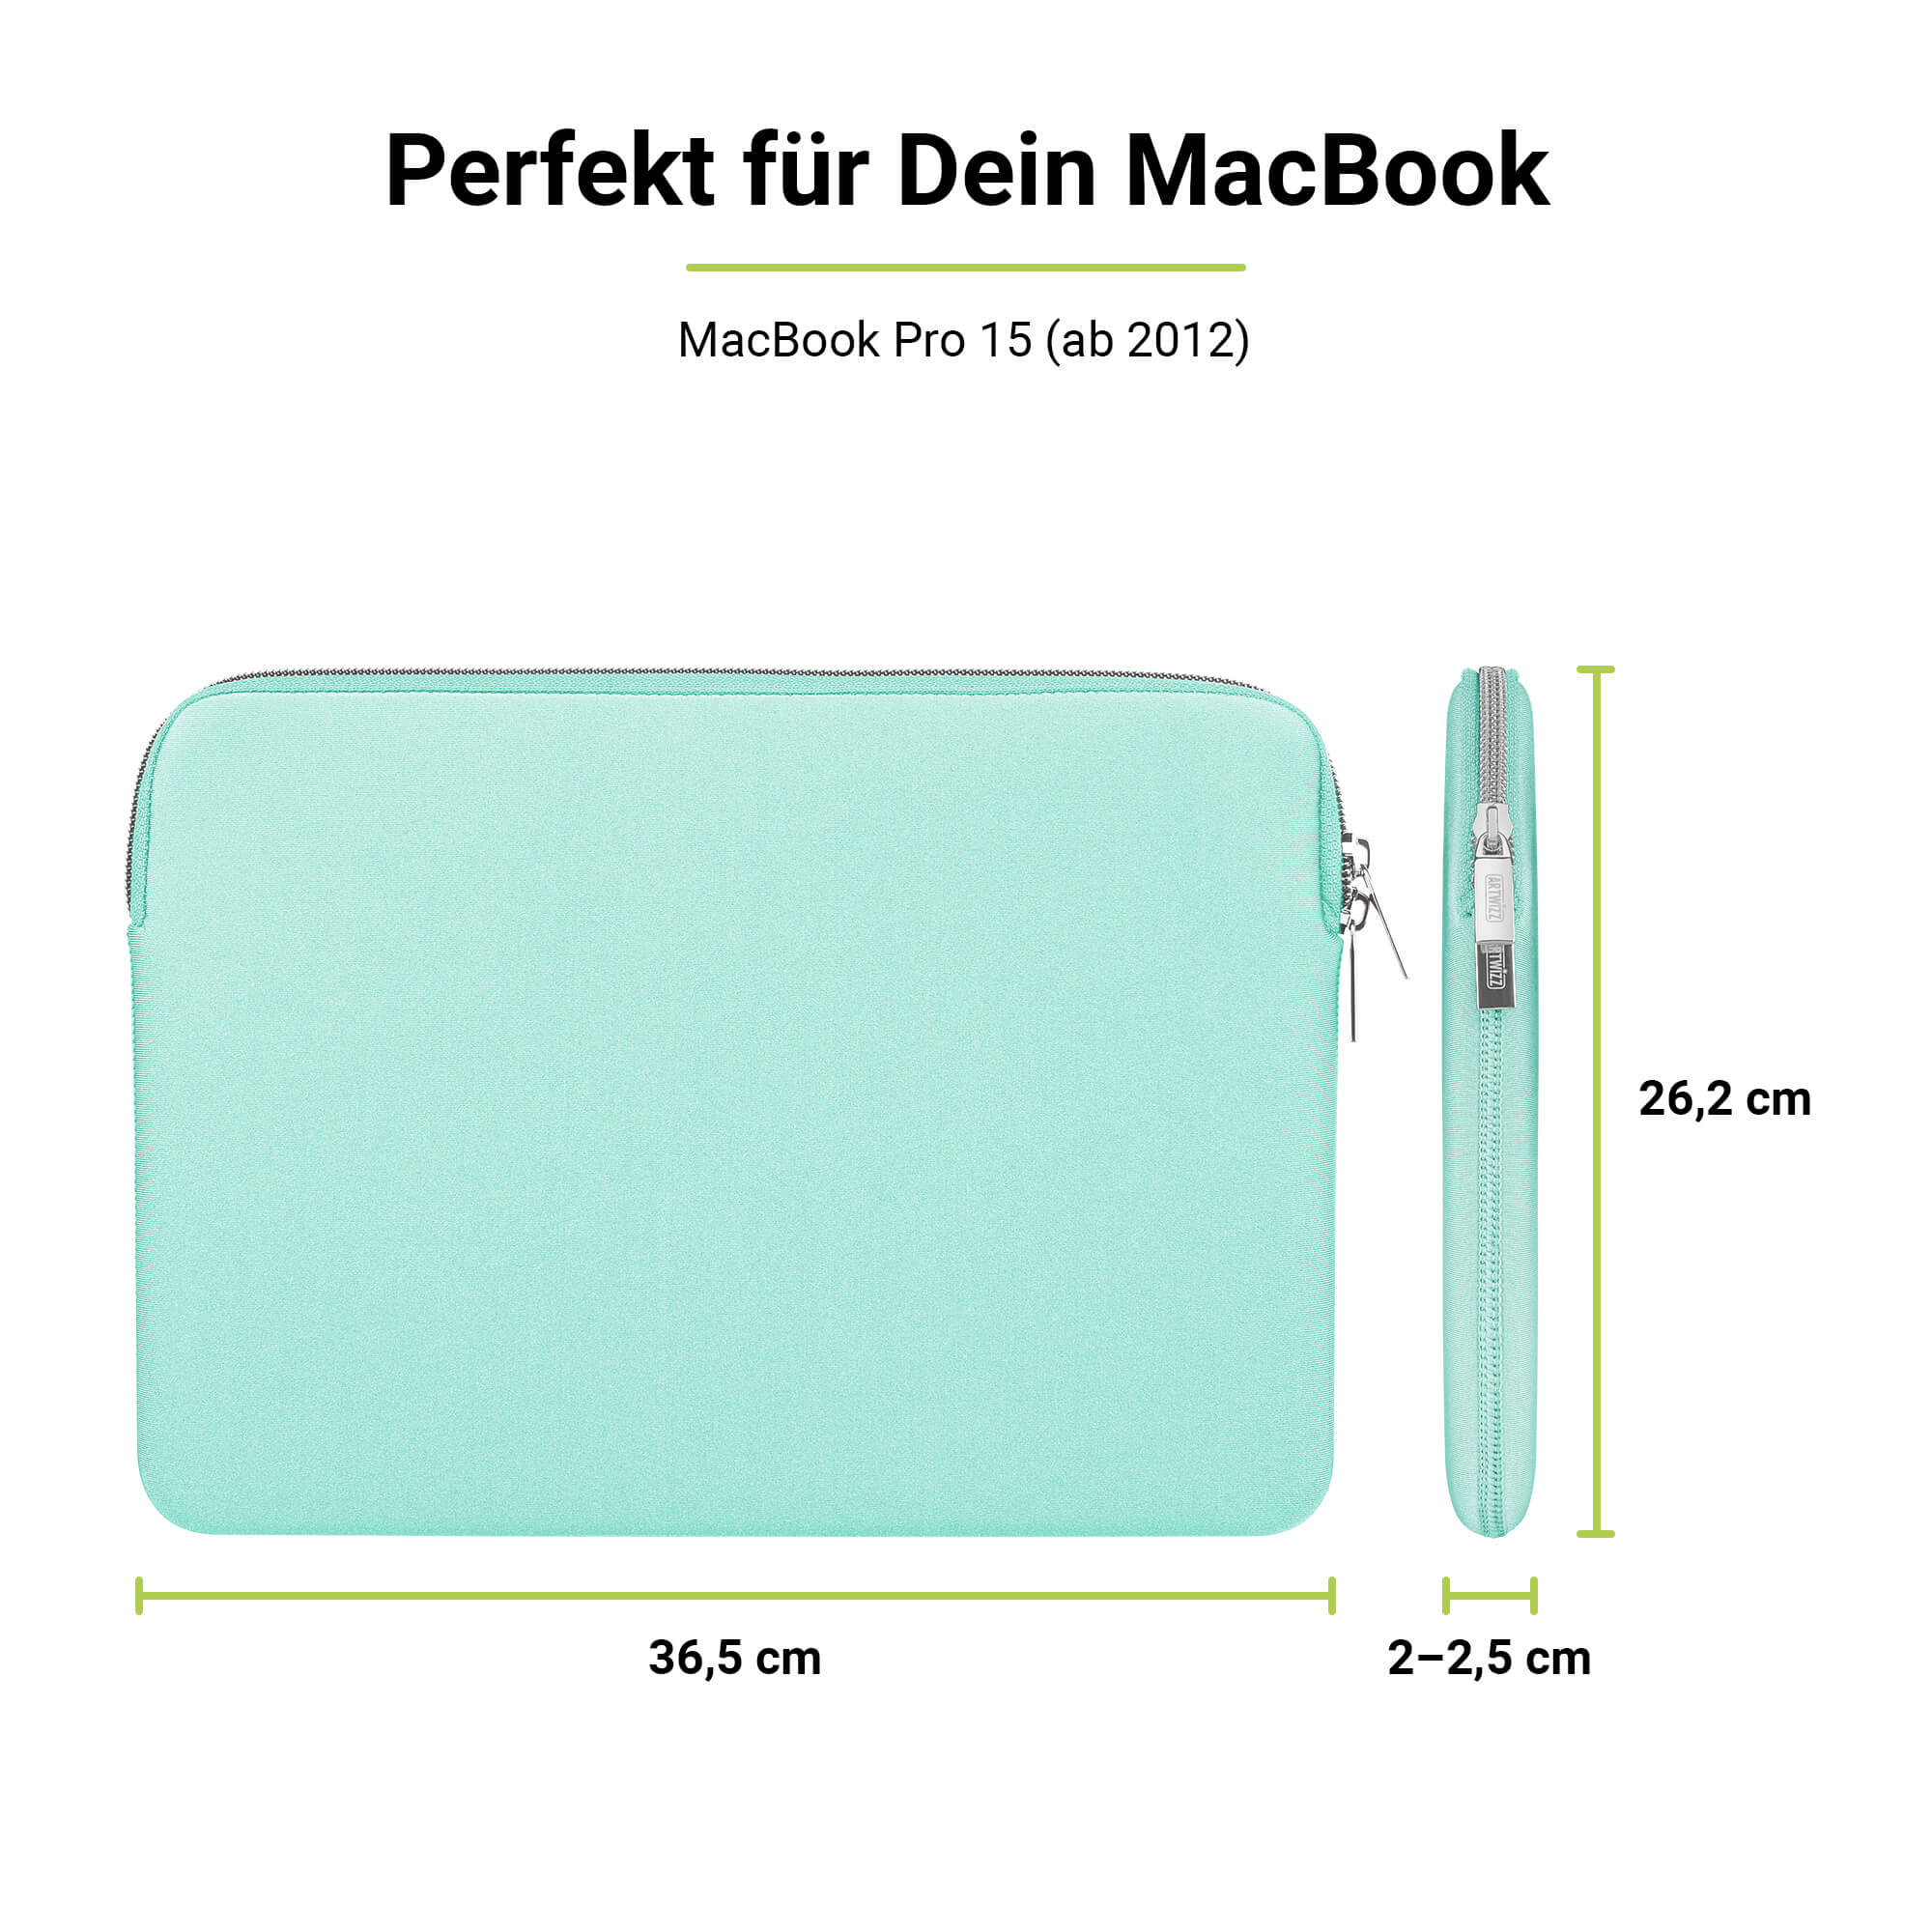 ARTWIZZ Neoprene Grün Notebook Sleeve Apple für Neopren, Sleeve Tasche